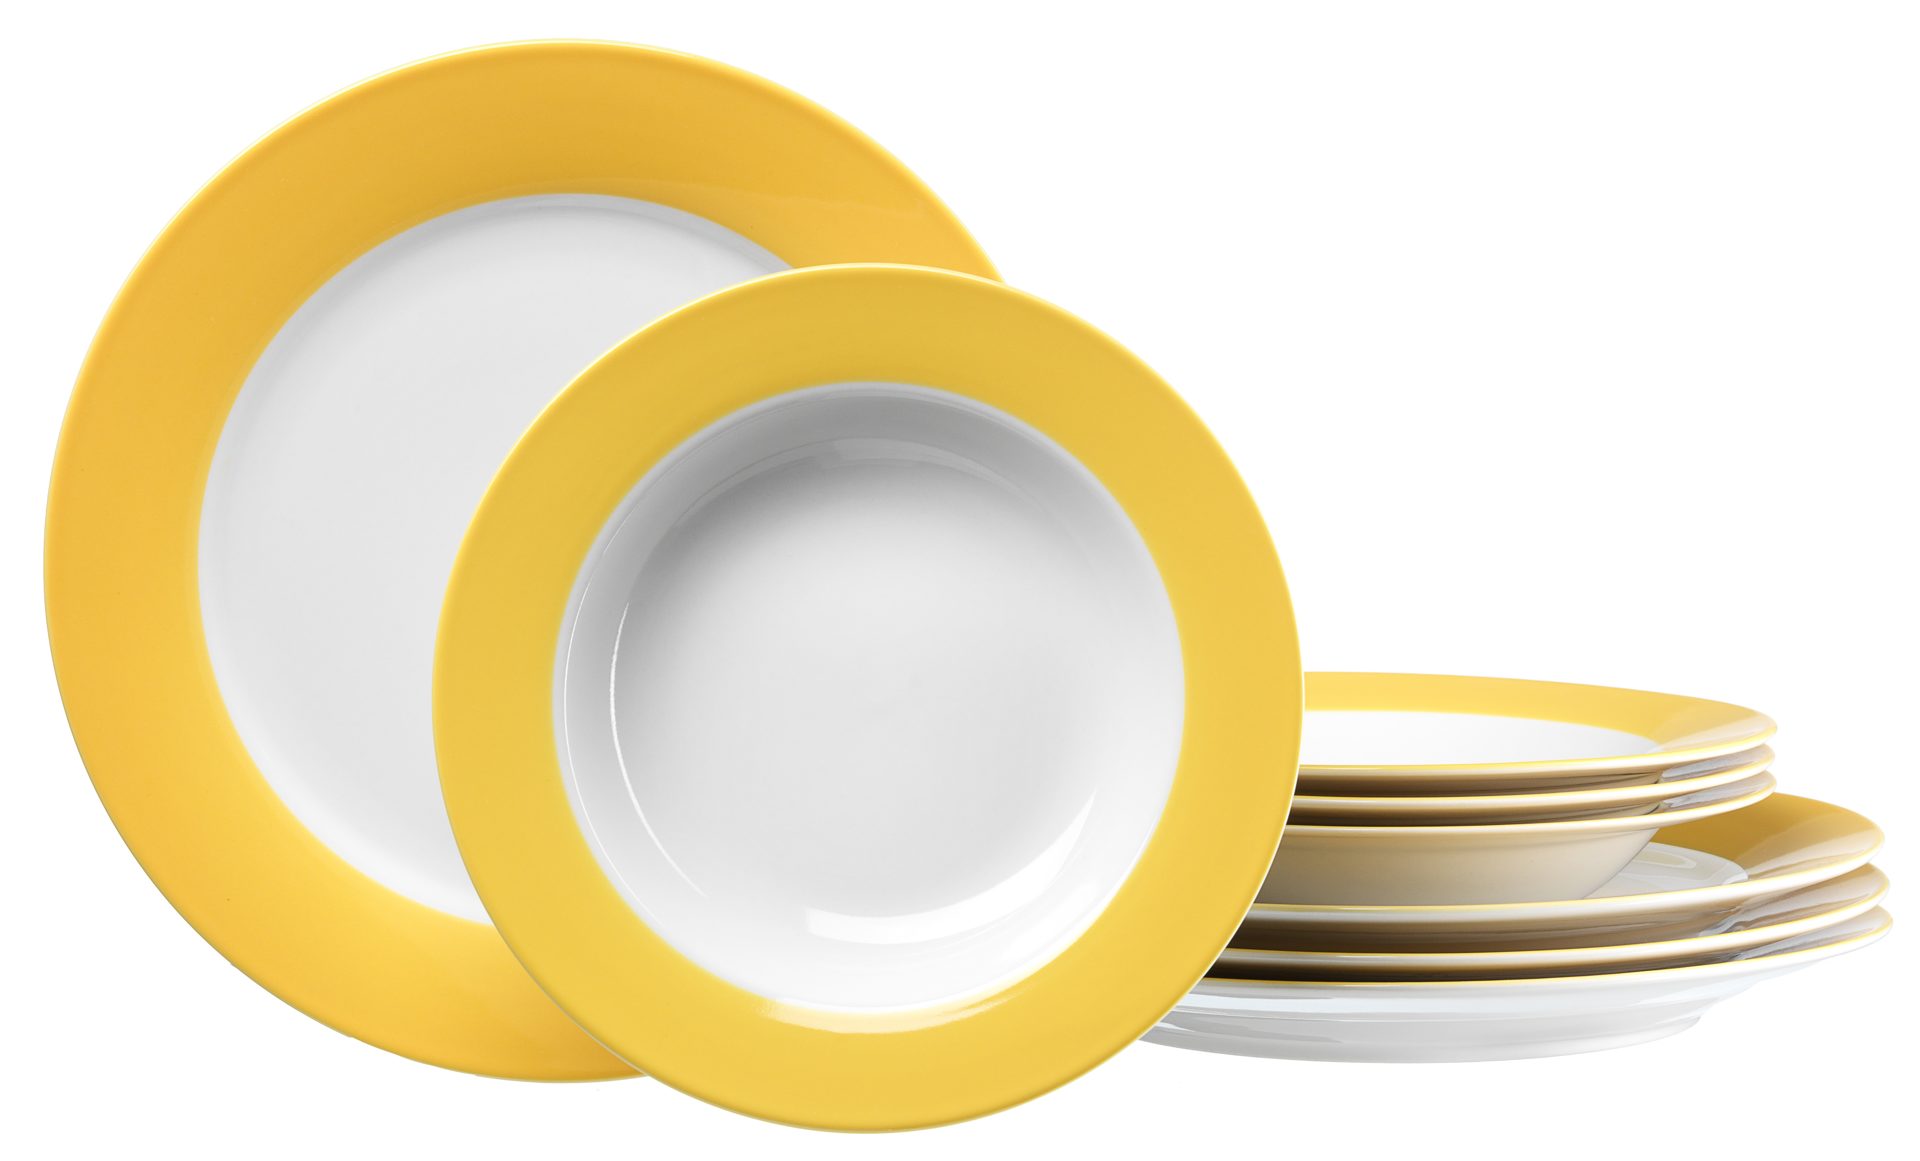 Tafelservice Ritzenhoff & breker aus Porzellan in Gelb Tafelservice Doppio weißes Porzellan mit gelbem Rand - 8-teilig, Tafelgeschirr